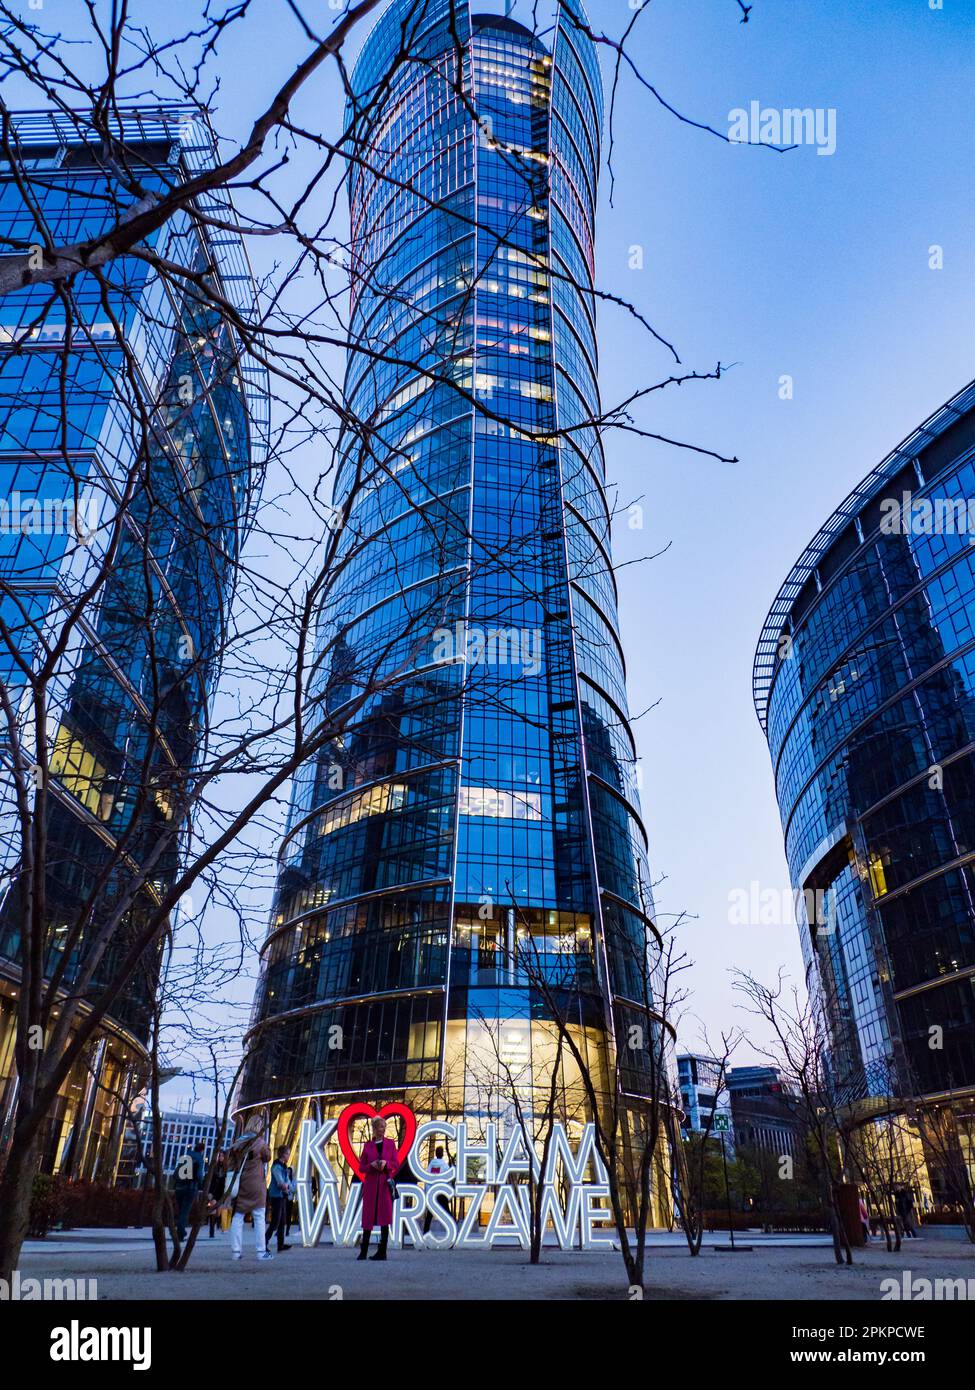 Varsovie, Pologne - avril 2022 : gratte-ciels modernes en verre à Varsovie. Place européenne. Europe centrale Banque D'Images